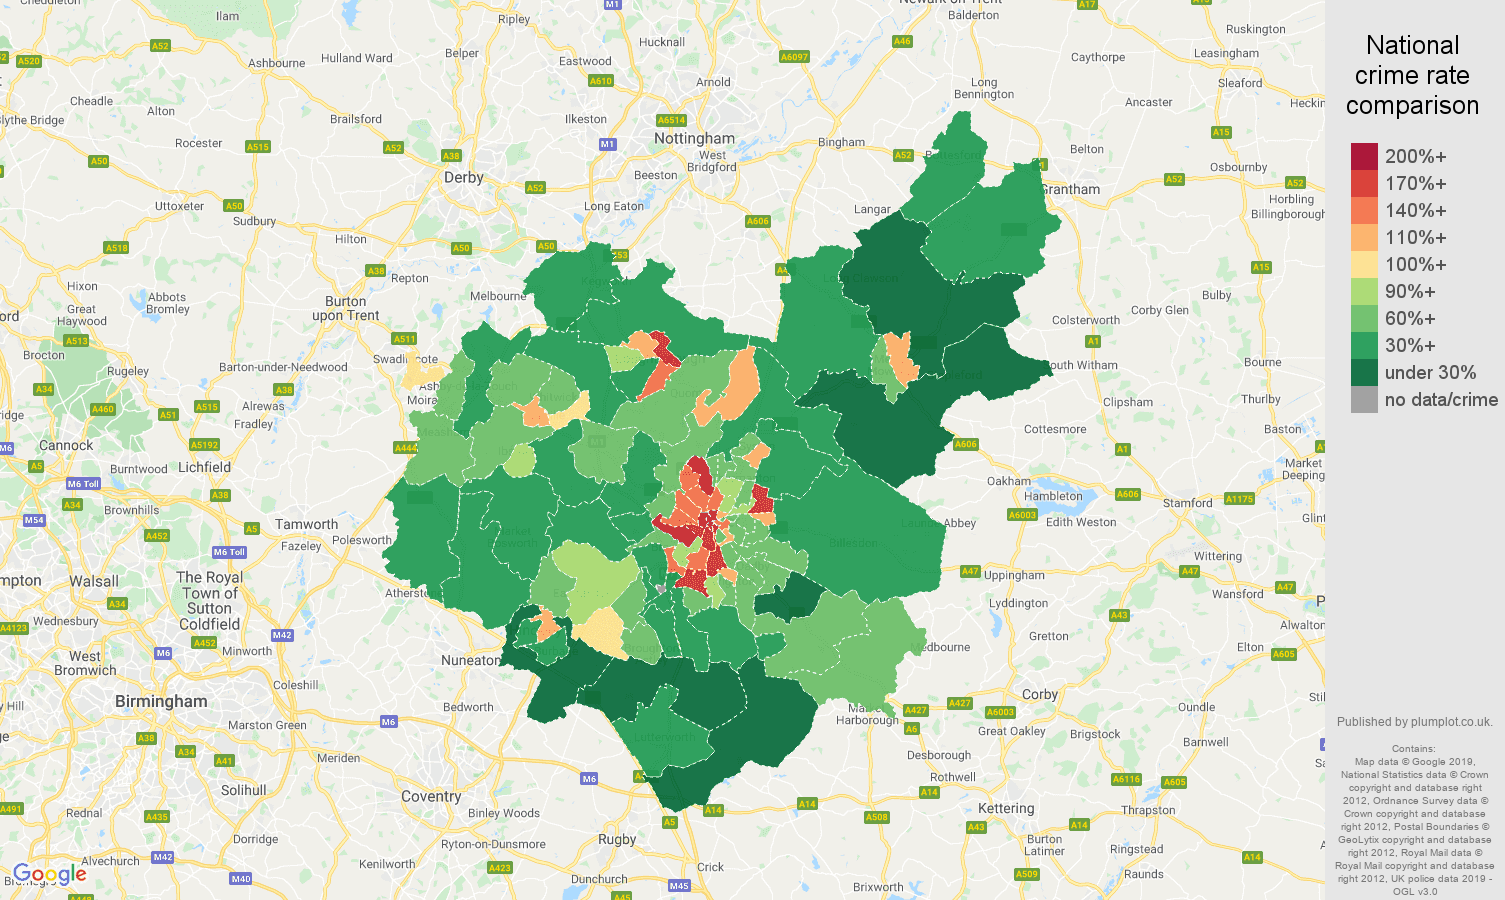 Leicestershire public order crime rate comparison map